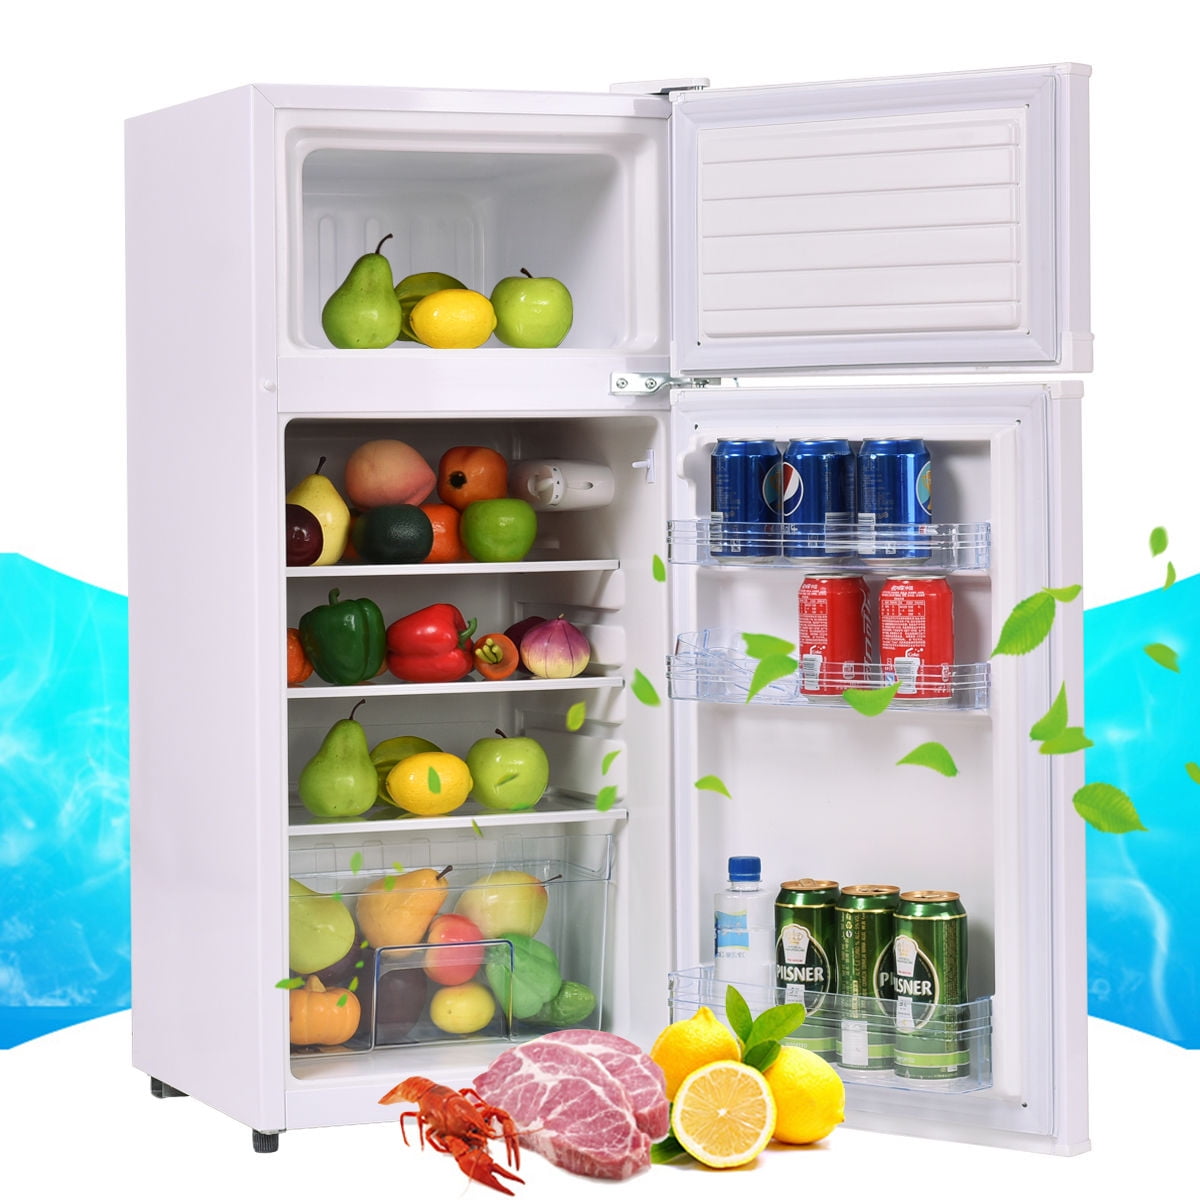  mj-EP22756 Compact Refrigerator, Black: Home & Kitchen